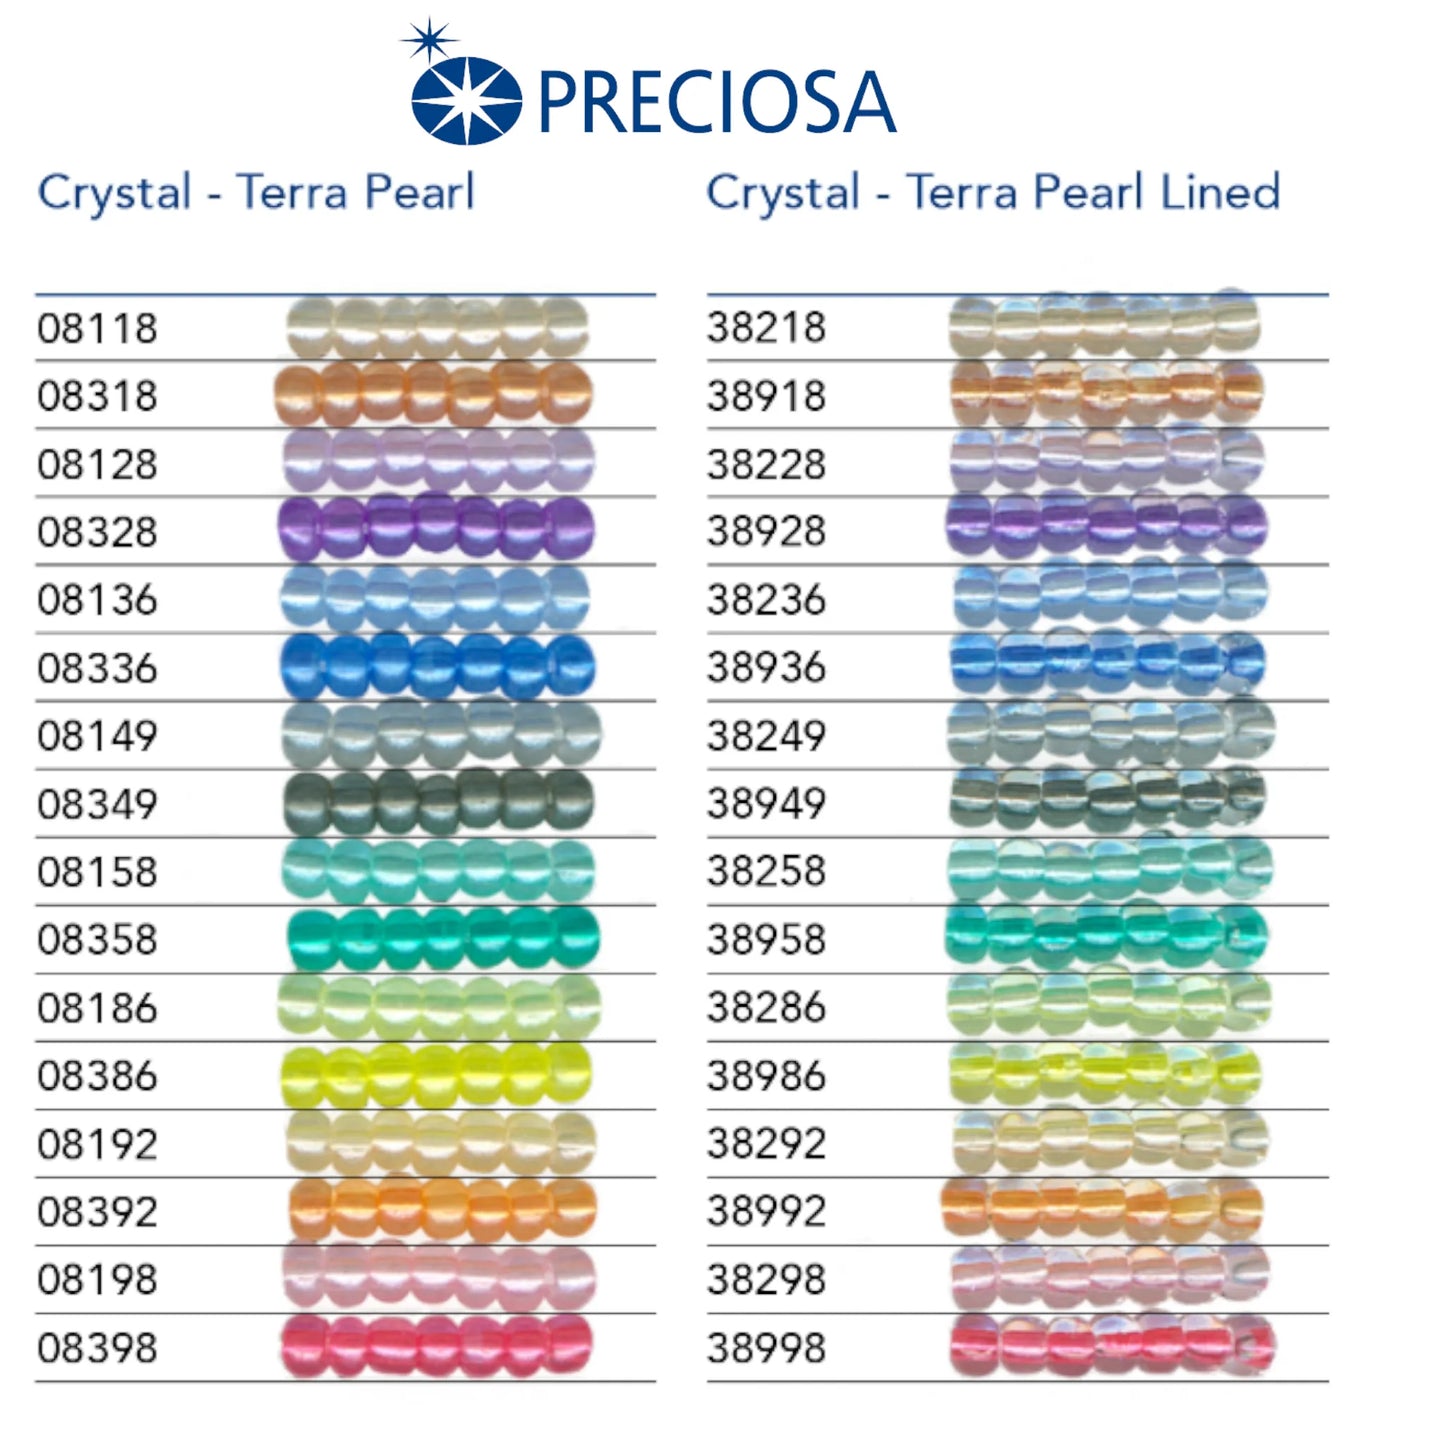 08318 Czech seed beads PRECIOSA Rocailles 10/0 brown orange. Crystal - Terra Pearl.